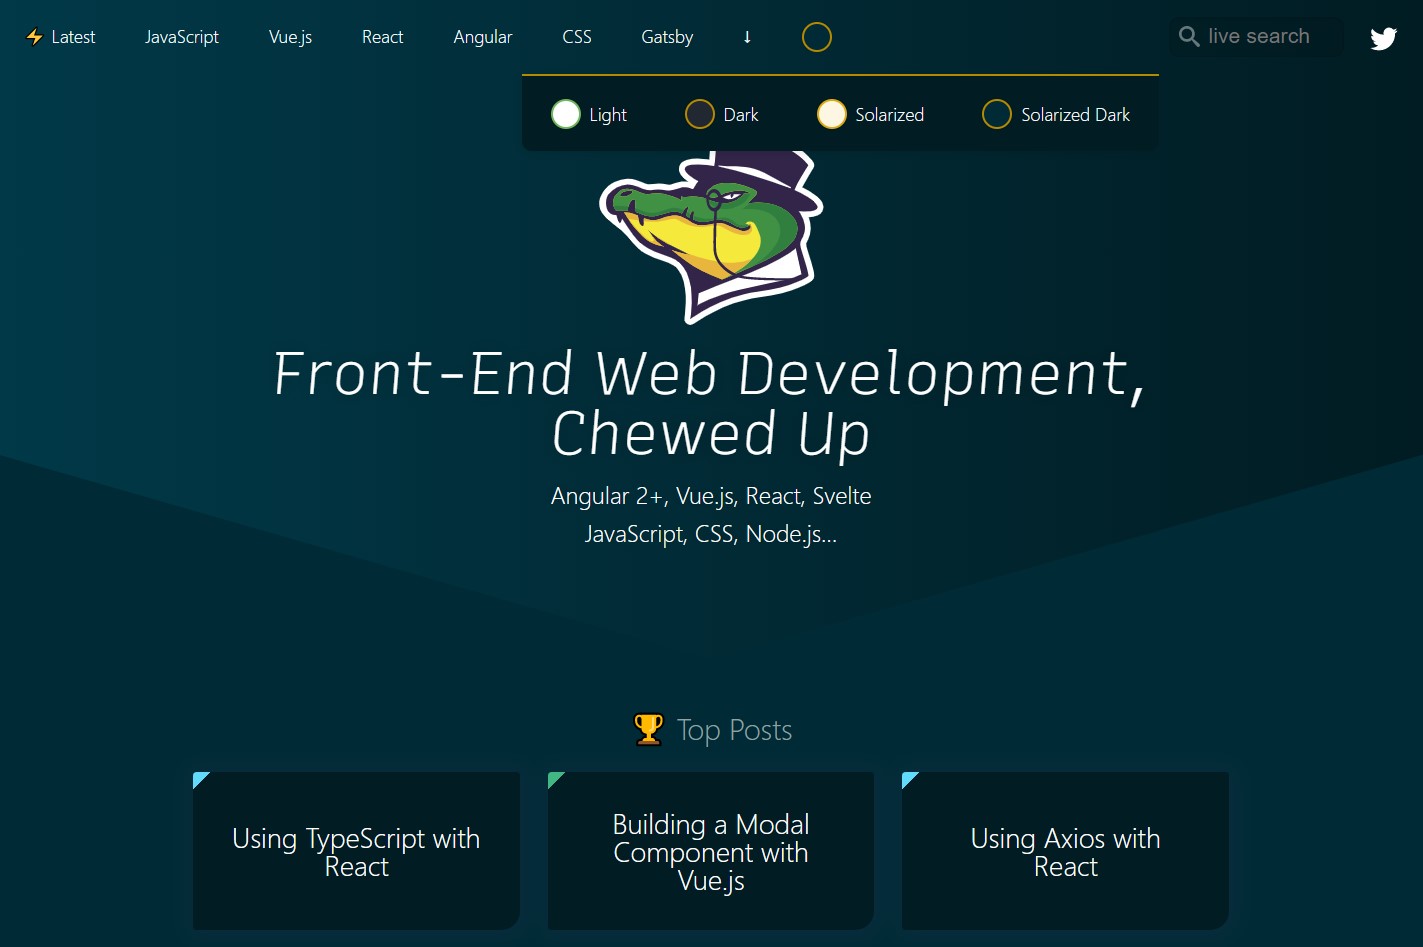 Frontend web development